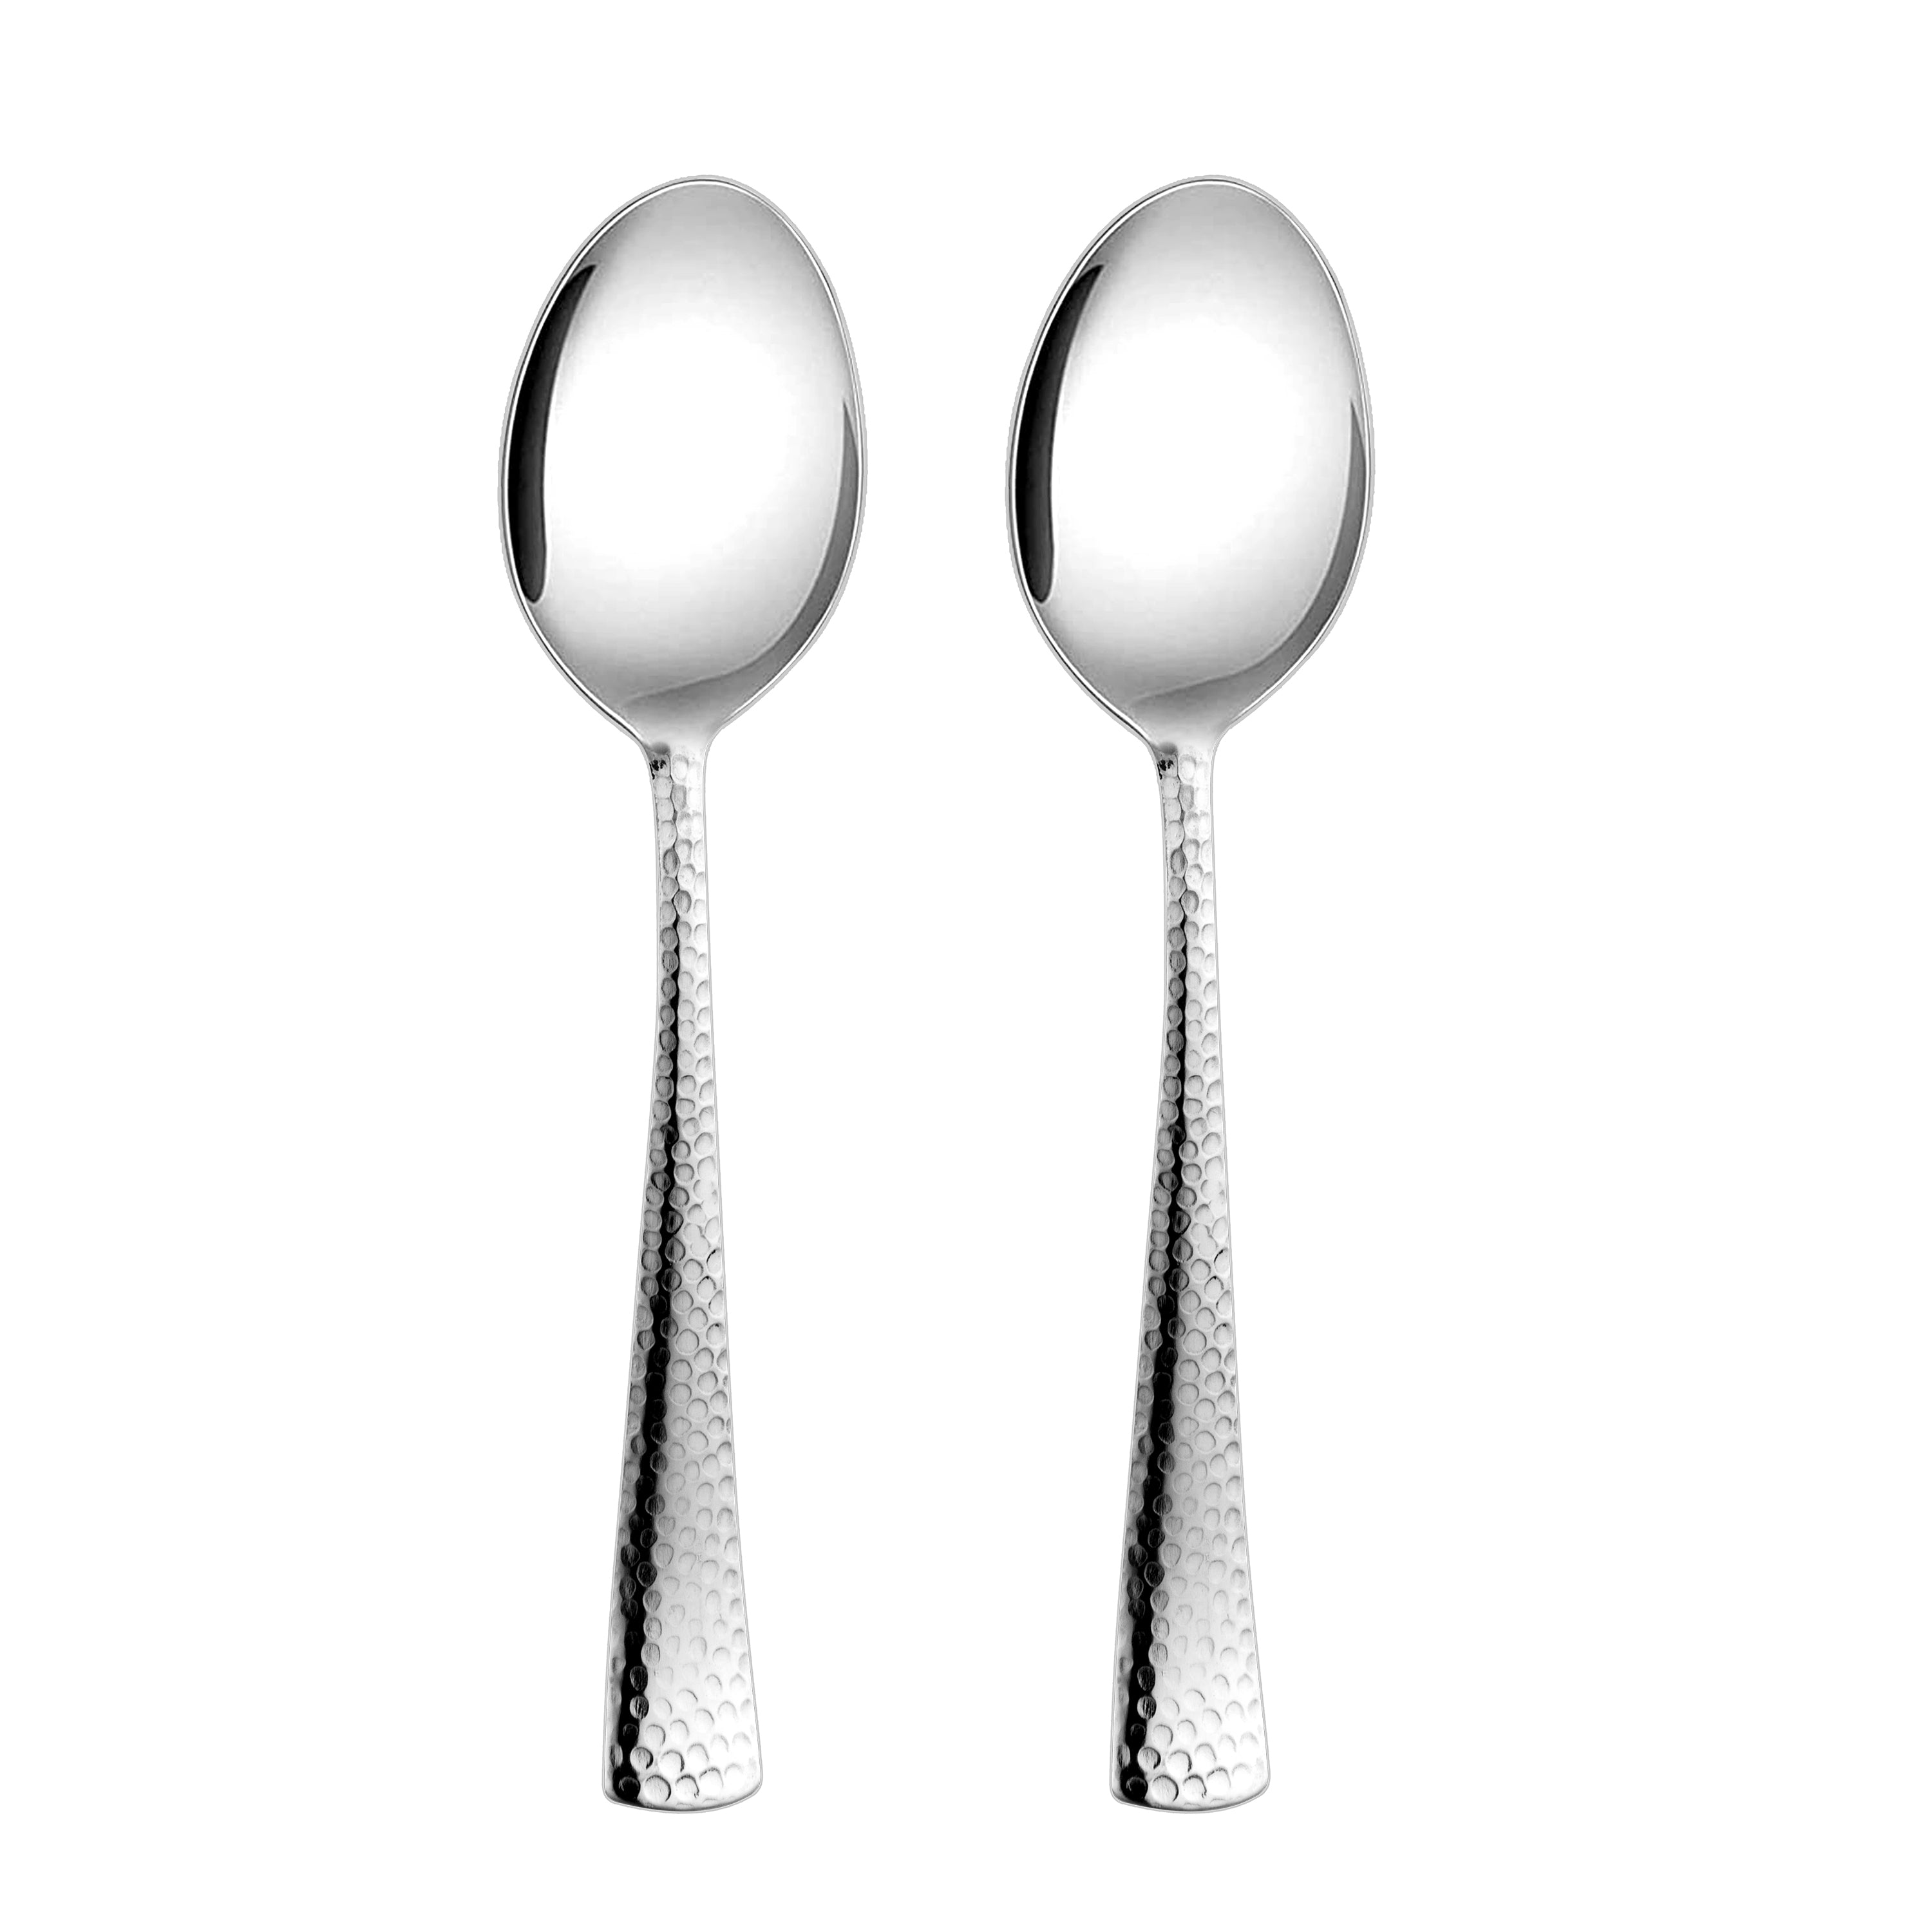 Arias by Lara Dutta Vintage Serving Spoon Set of 2 (Silver)